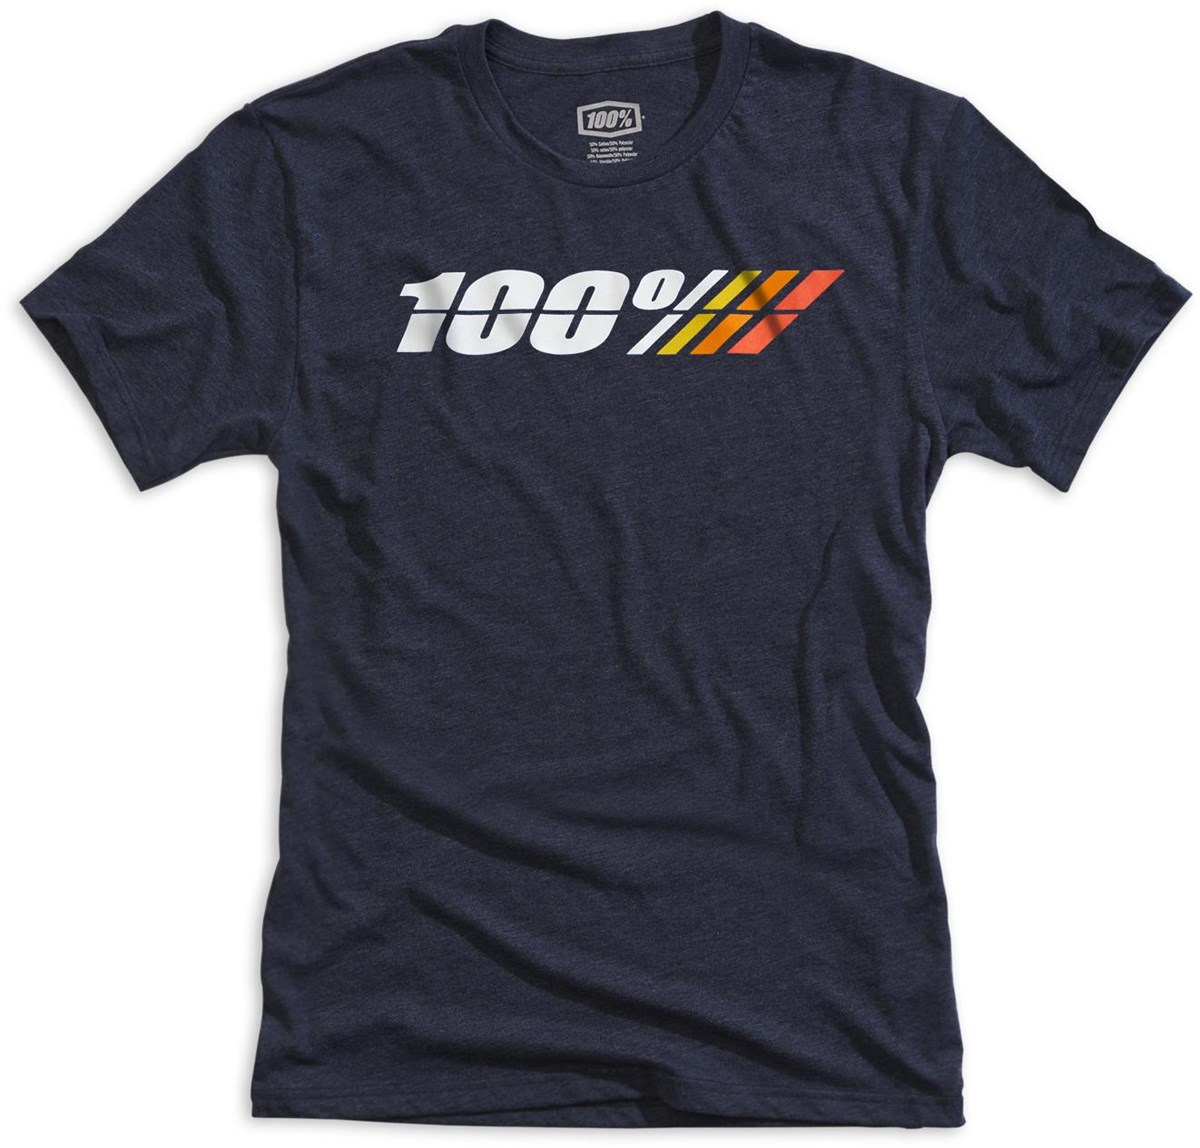 100% Motorrad Youth T-Shirt product image